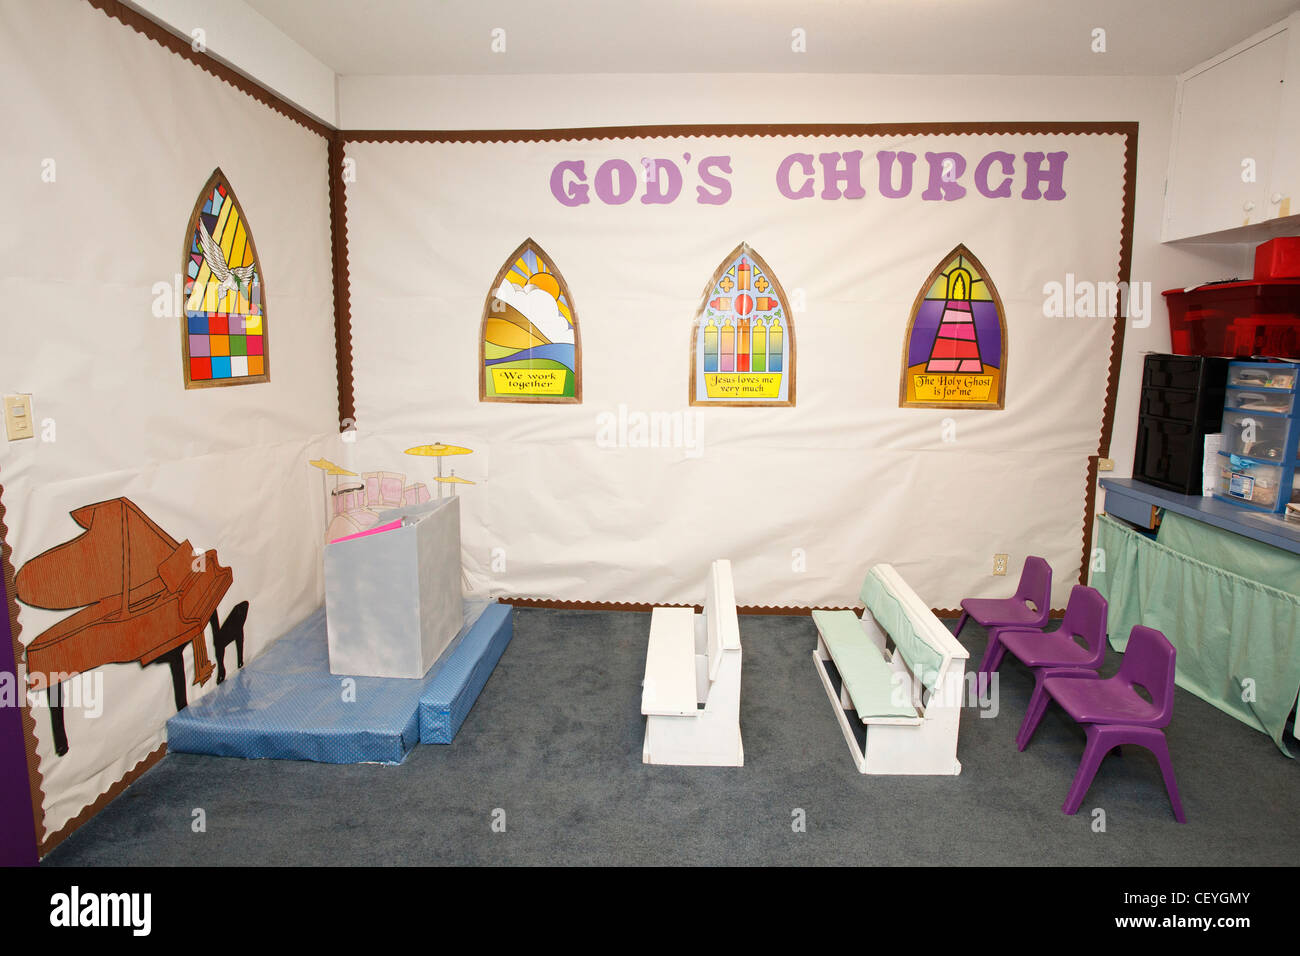 A Sunday School Classroom Decorated As A Miniature Church Building